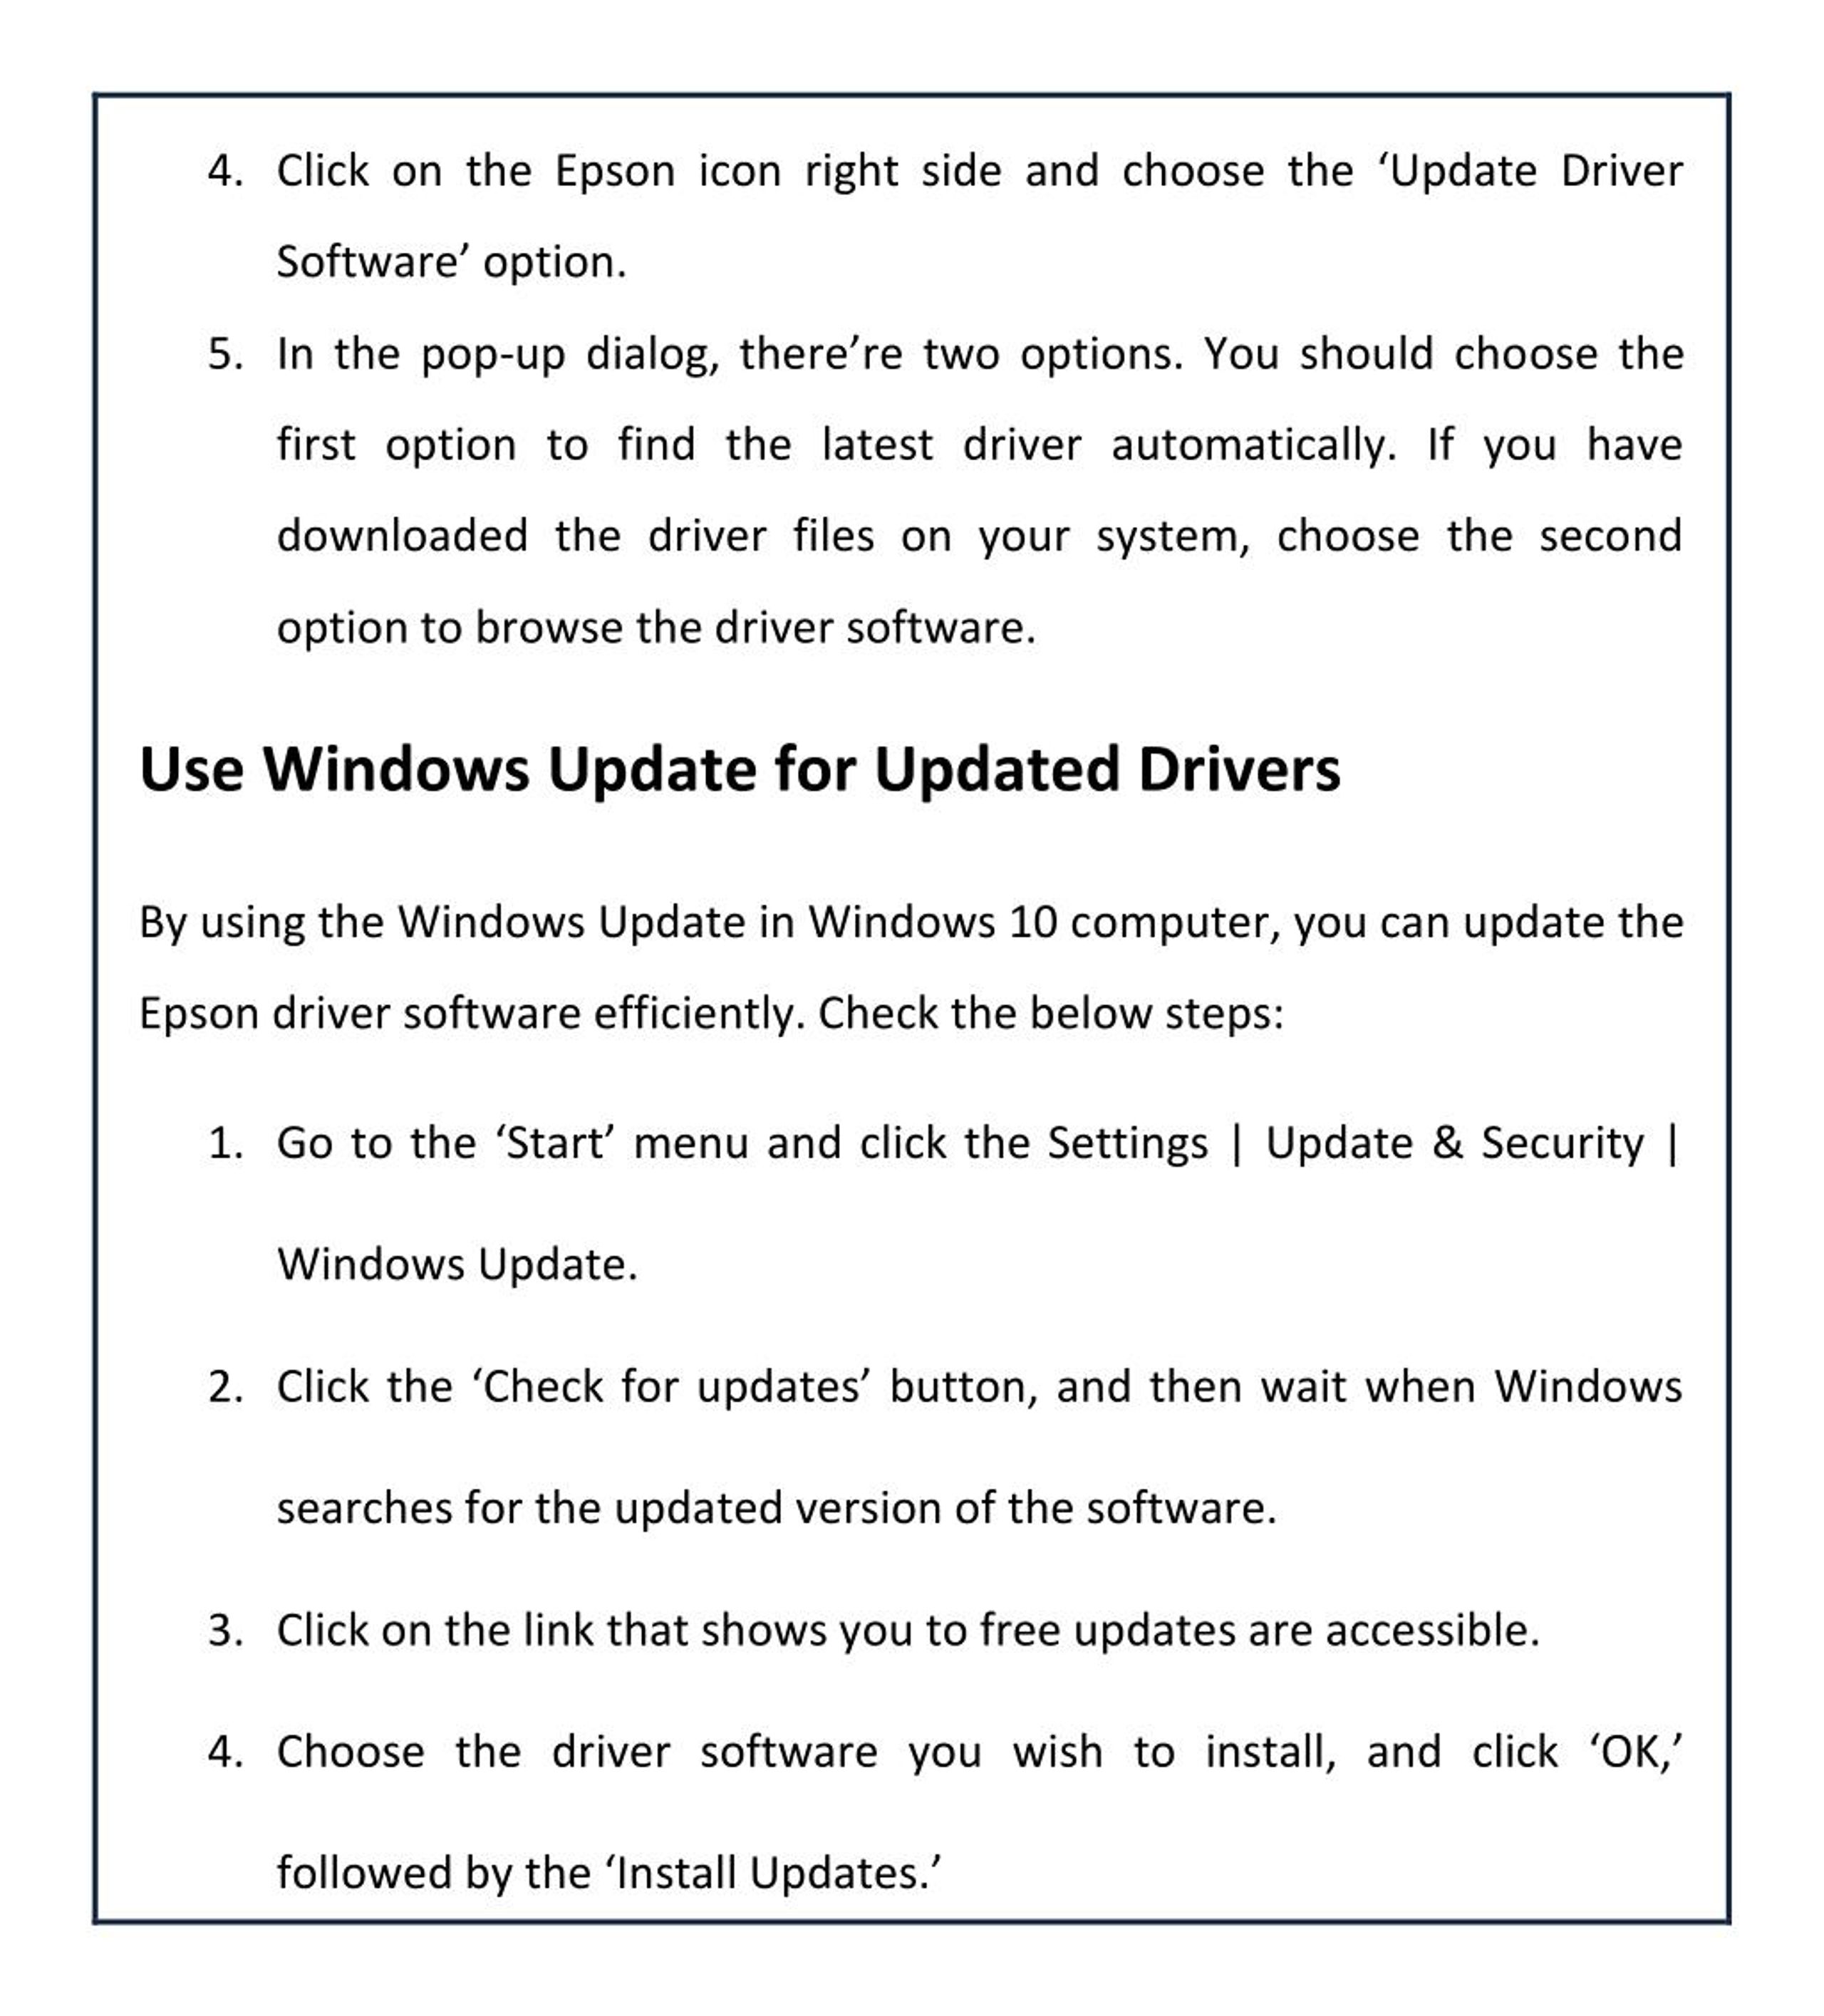 epson printer drivers for windows 7 problems